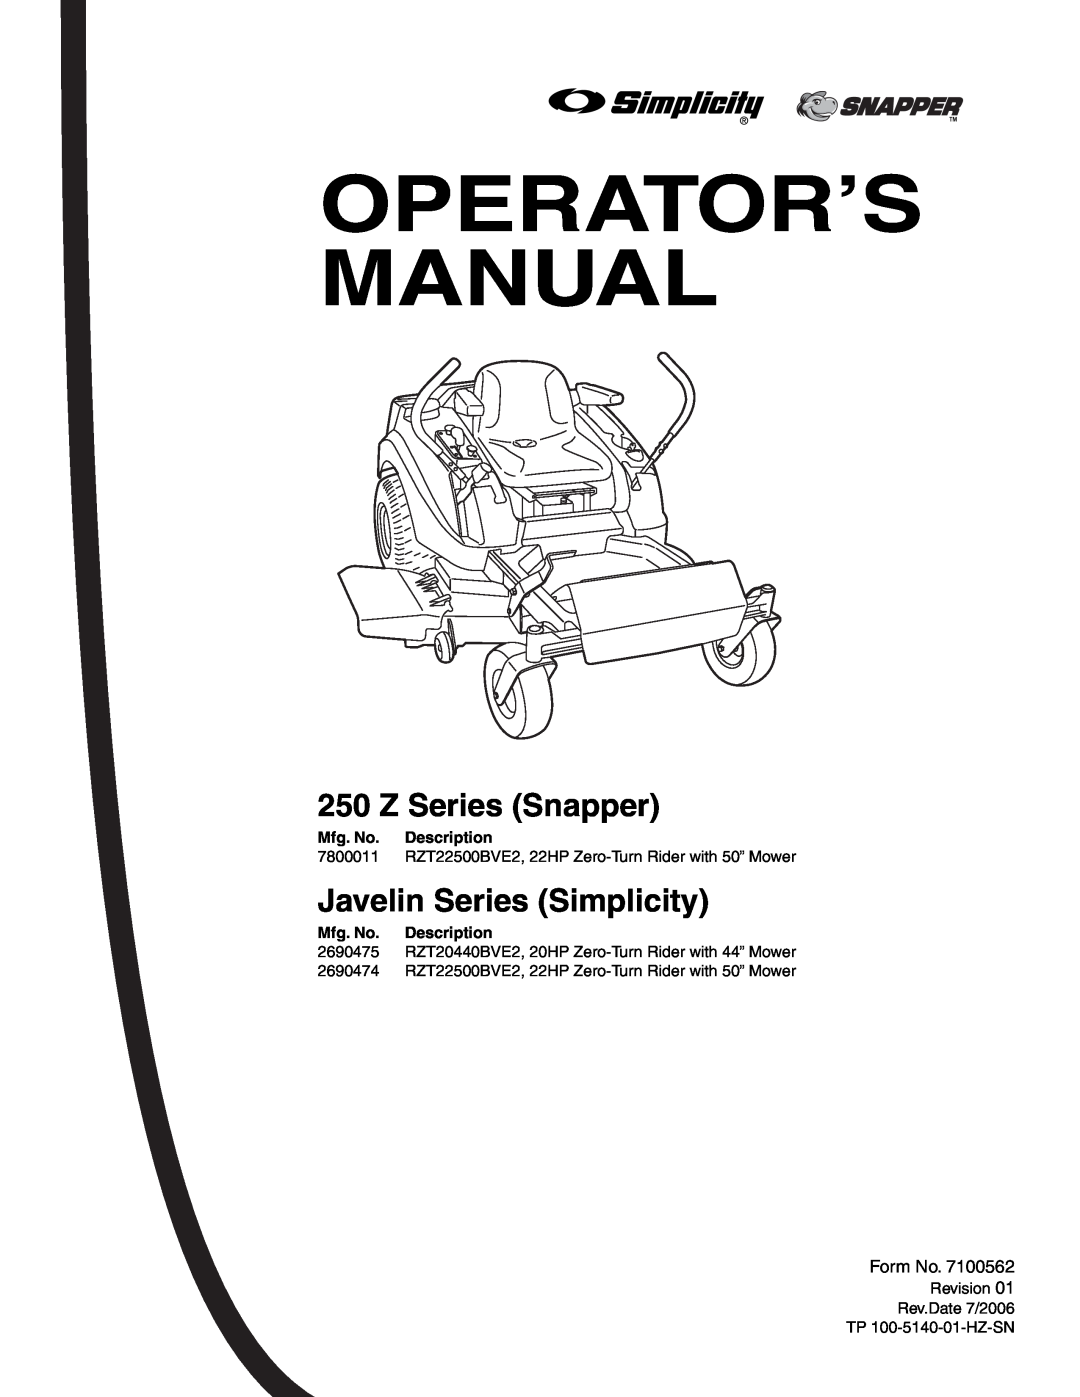 Snapper RZT20440BVE2 manual Z Series Snapper, Javelin Series Simplicity, Operator’S Manual, Mfg. No. Description 